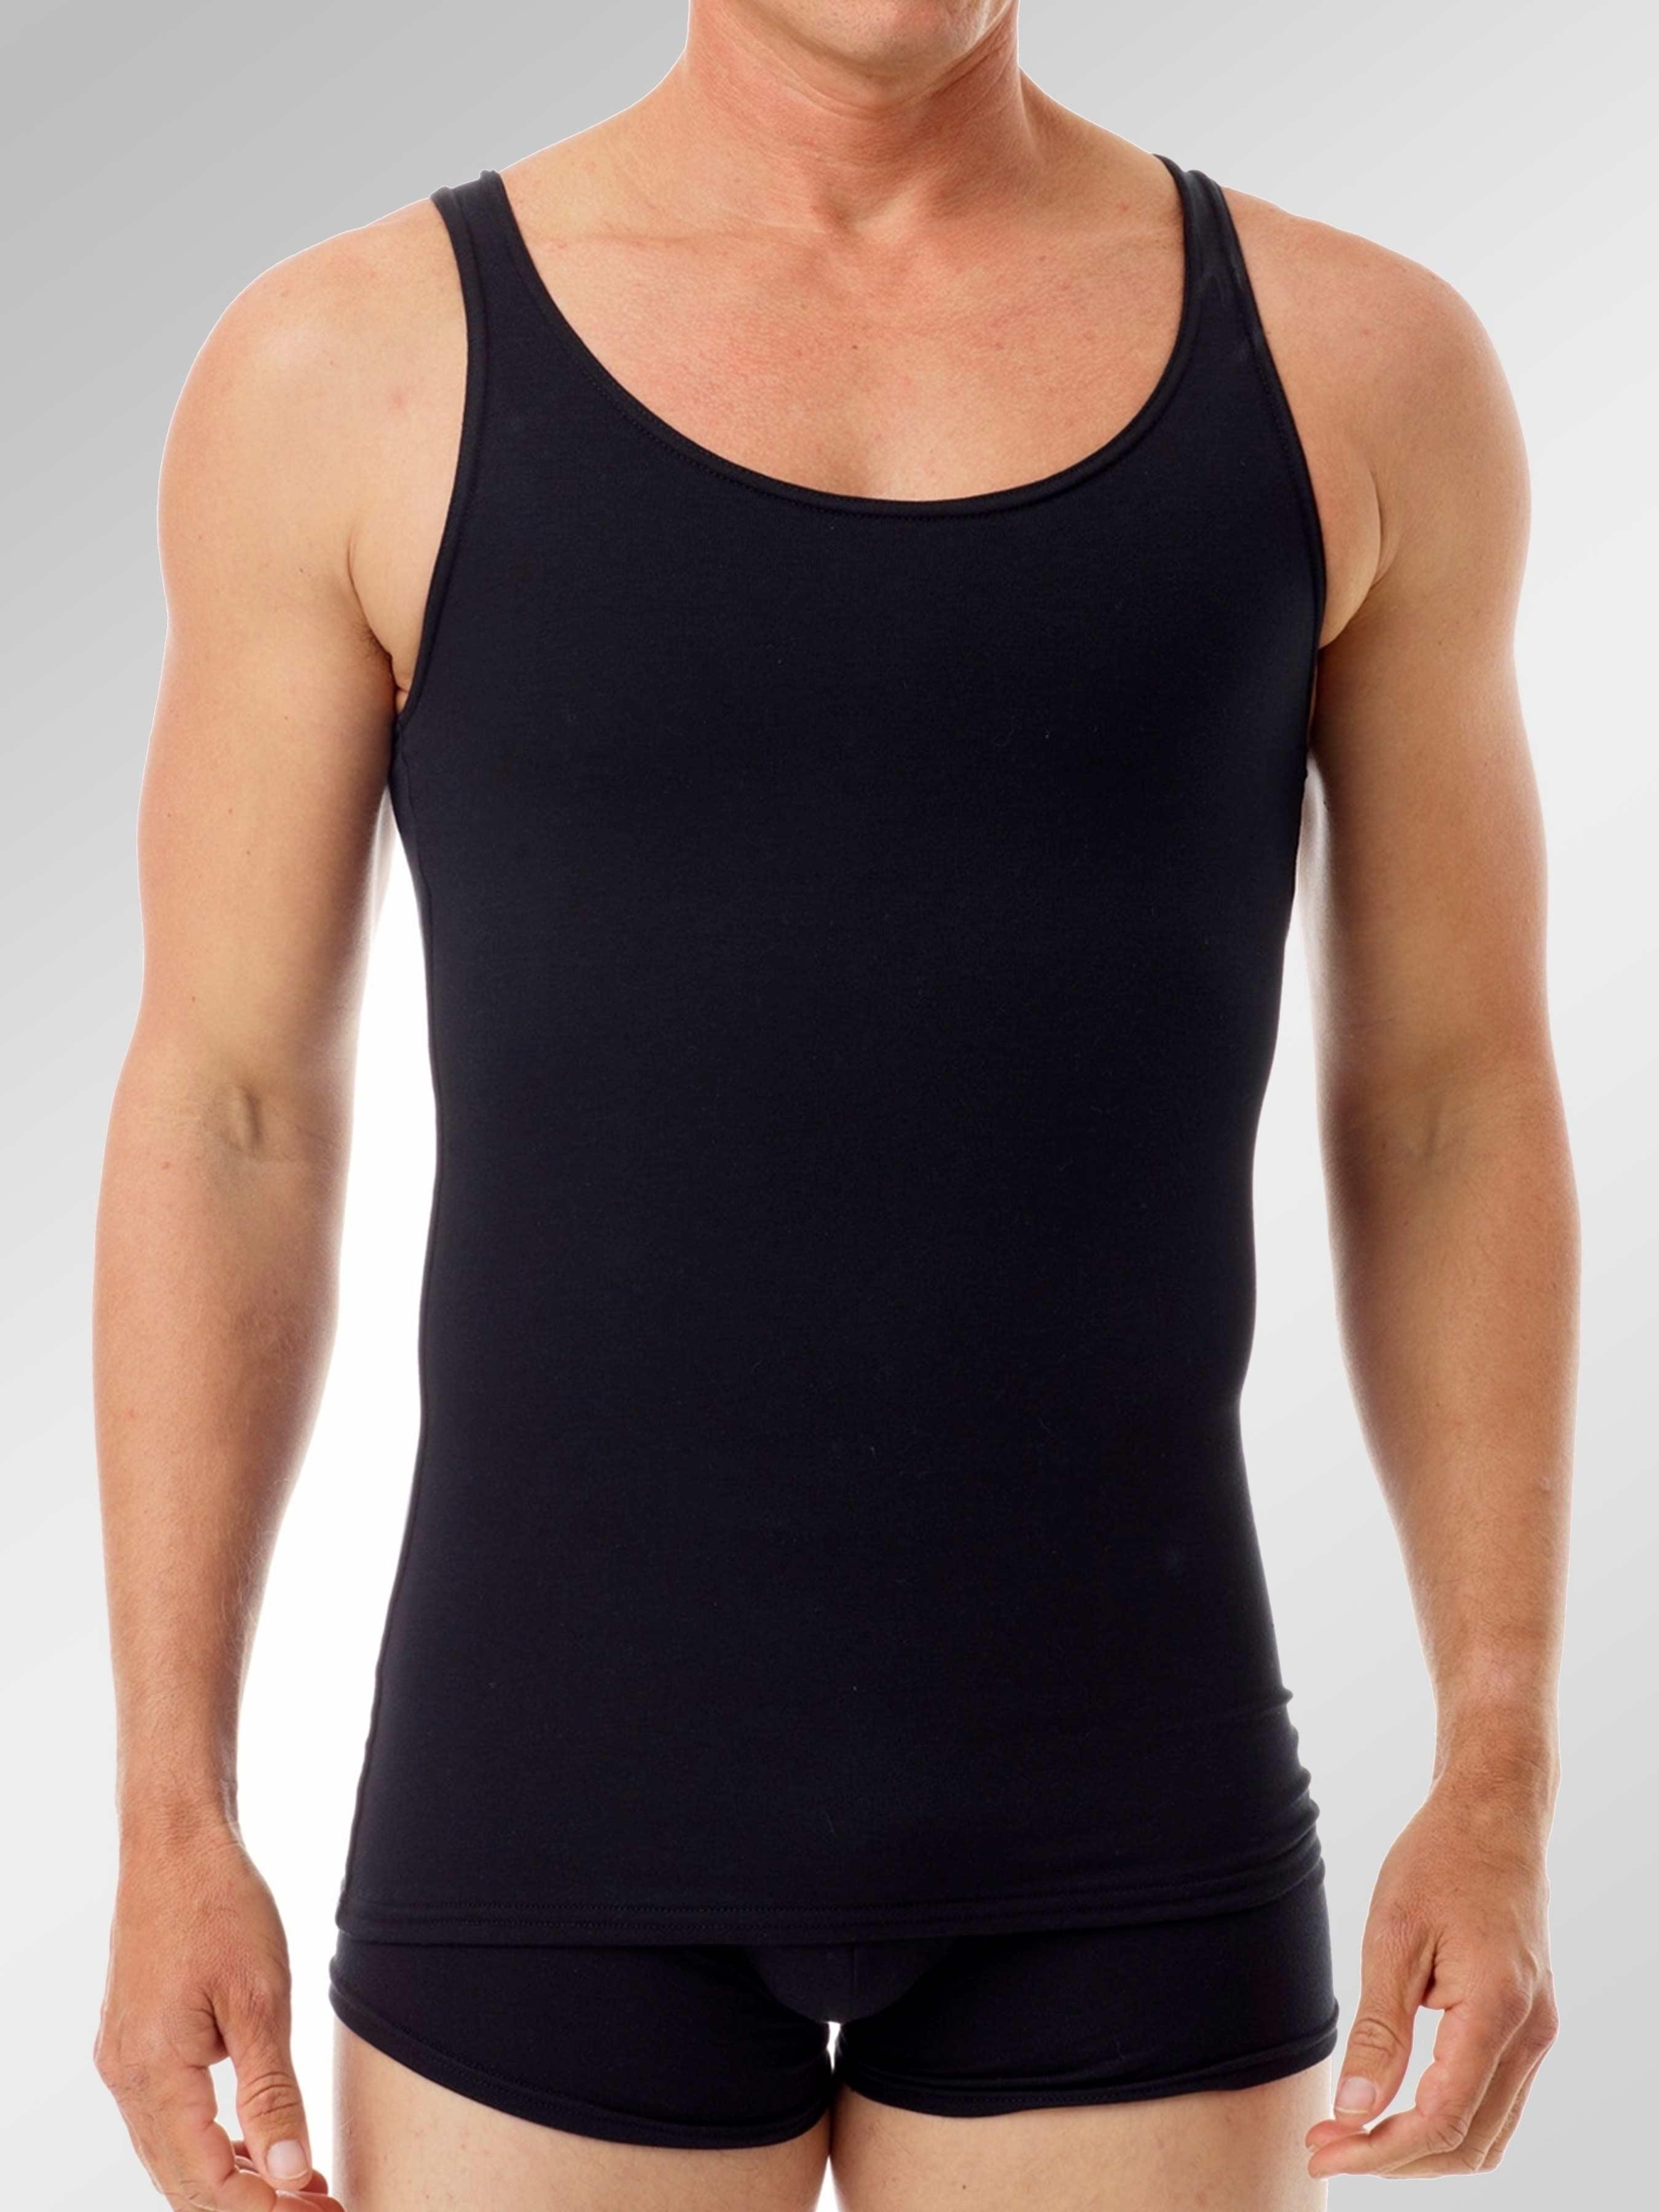 Insta Slim Men's Black Compression Muscle Tank Shirt (3X-Large)